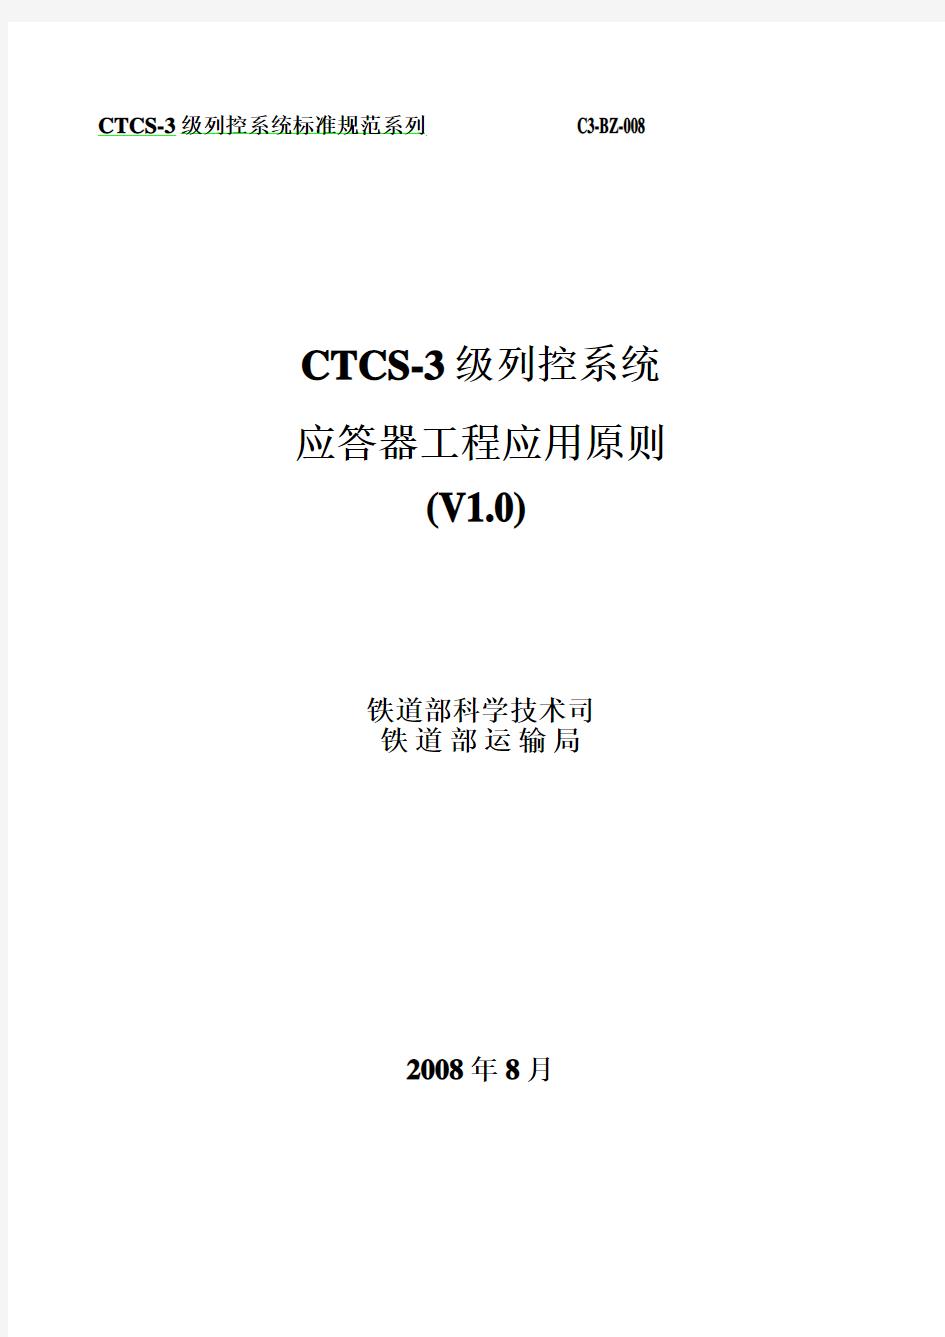 CTCS-3级应答器报文定义及运用原则(V1.0)